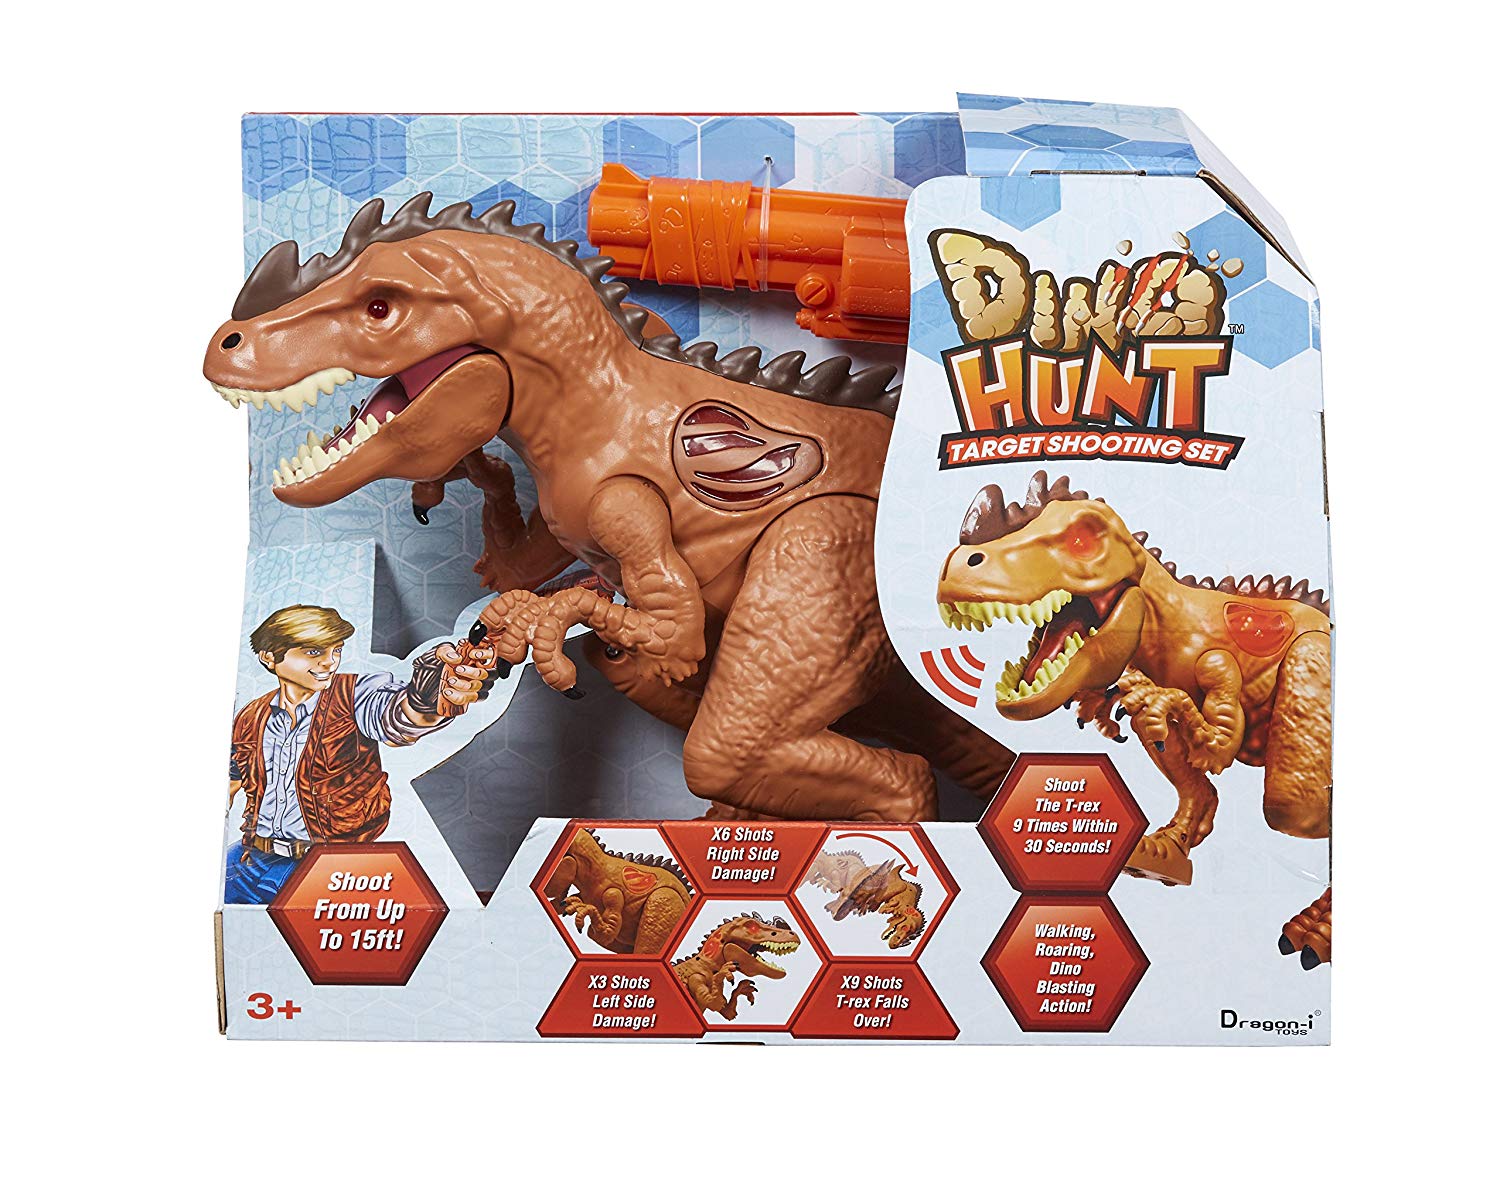 instal the last version for mac Dinosaur Hunting Games 2019